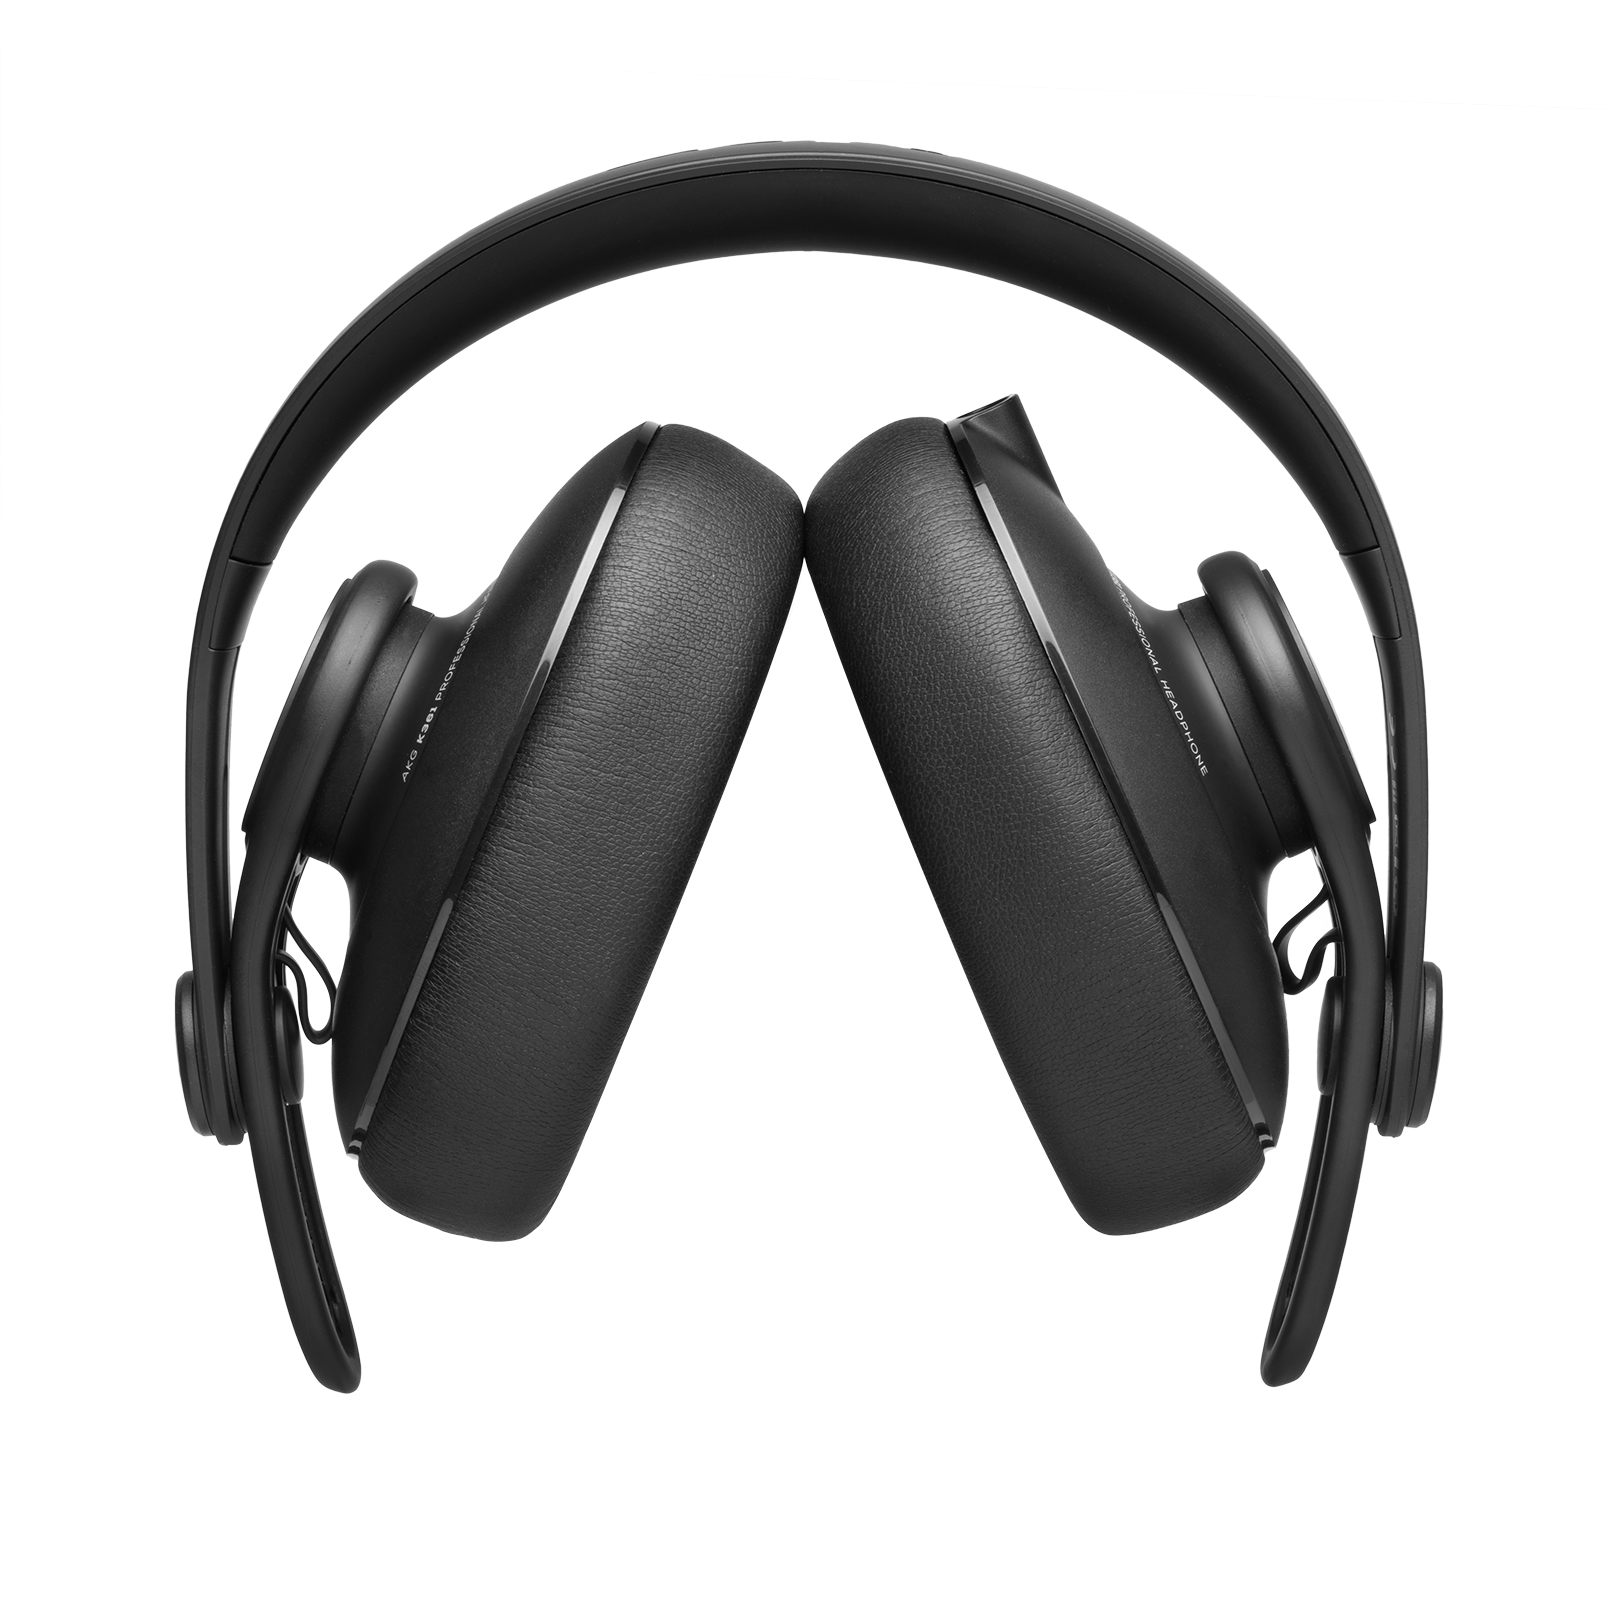 K361 - Black - Over-ear, closed-back, foldable studio headphones  - Detailshot 2